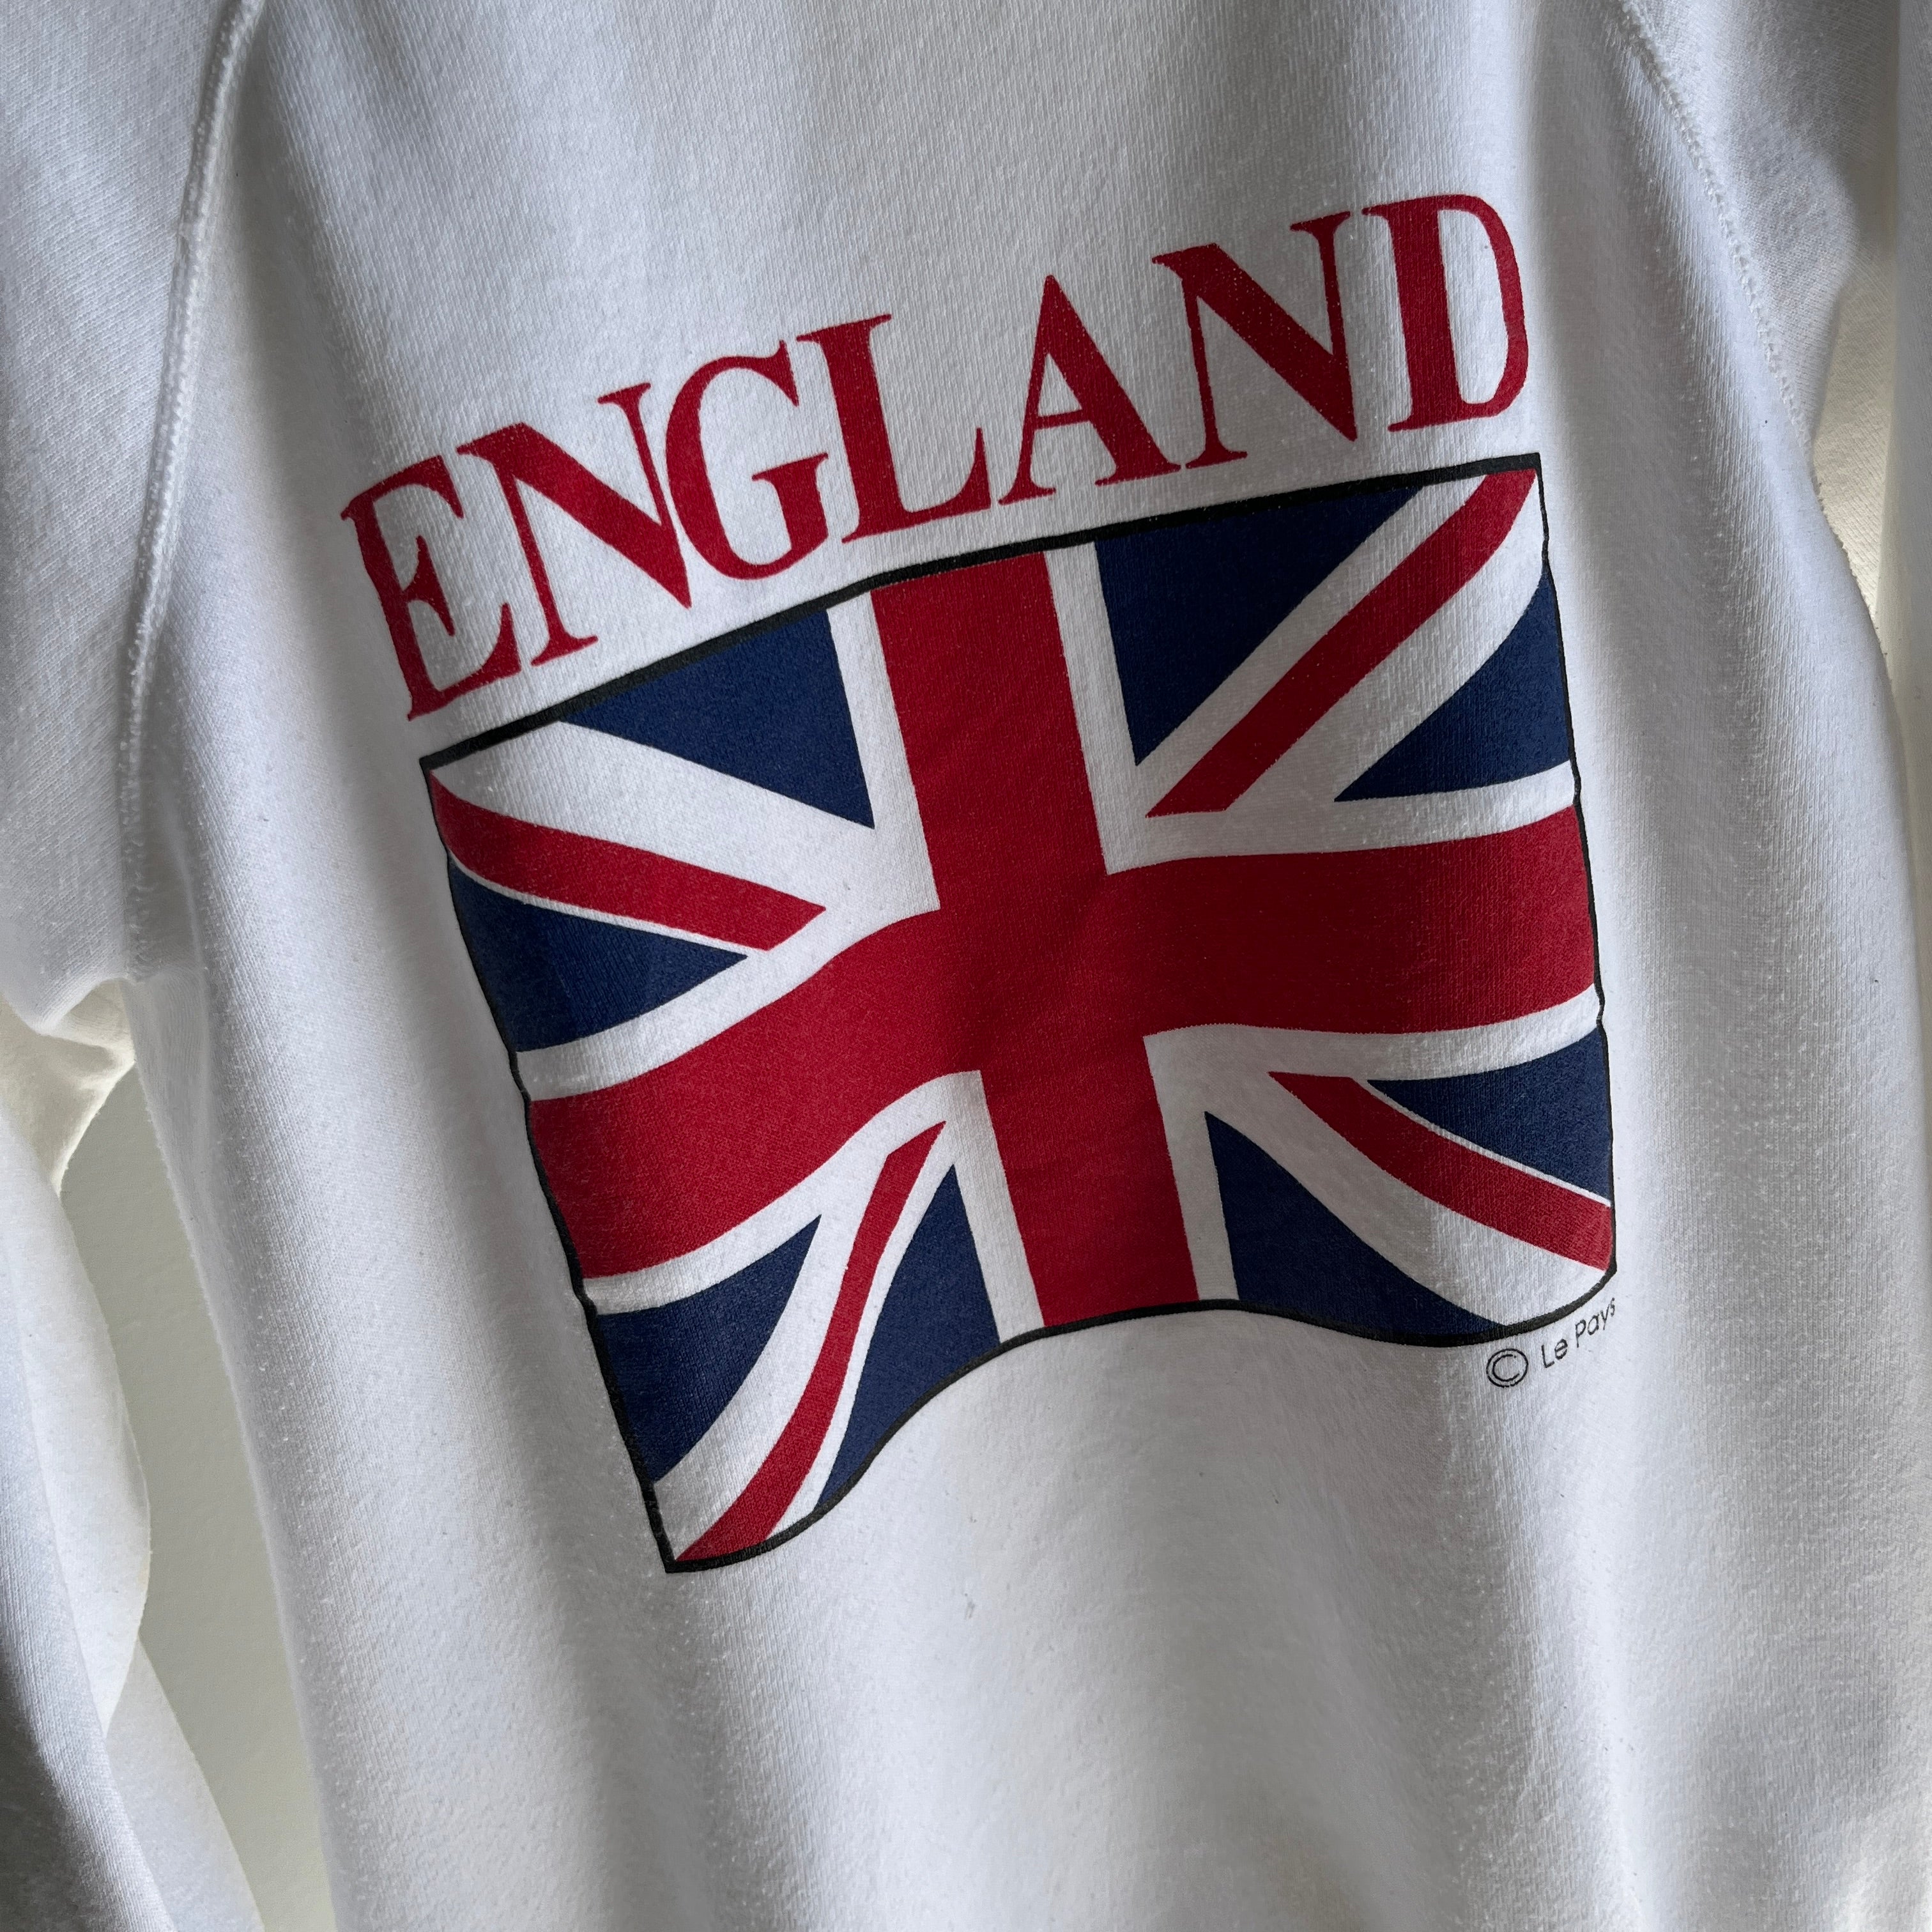 1980s England Sweatshirt - Made in America